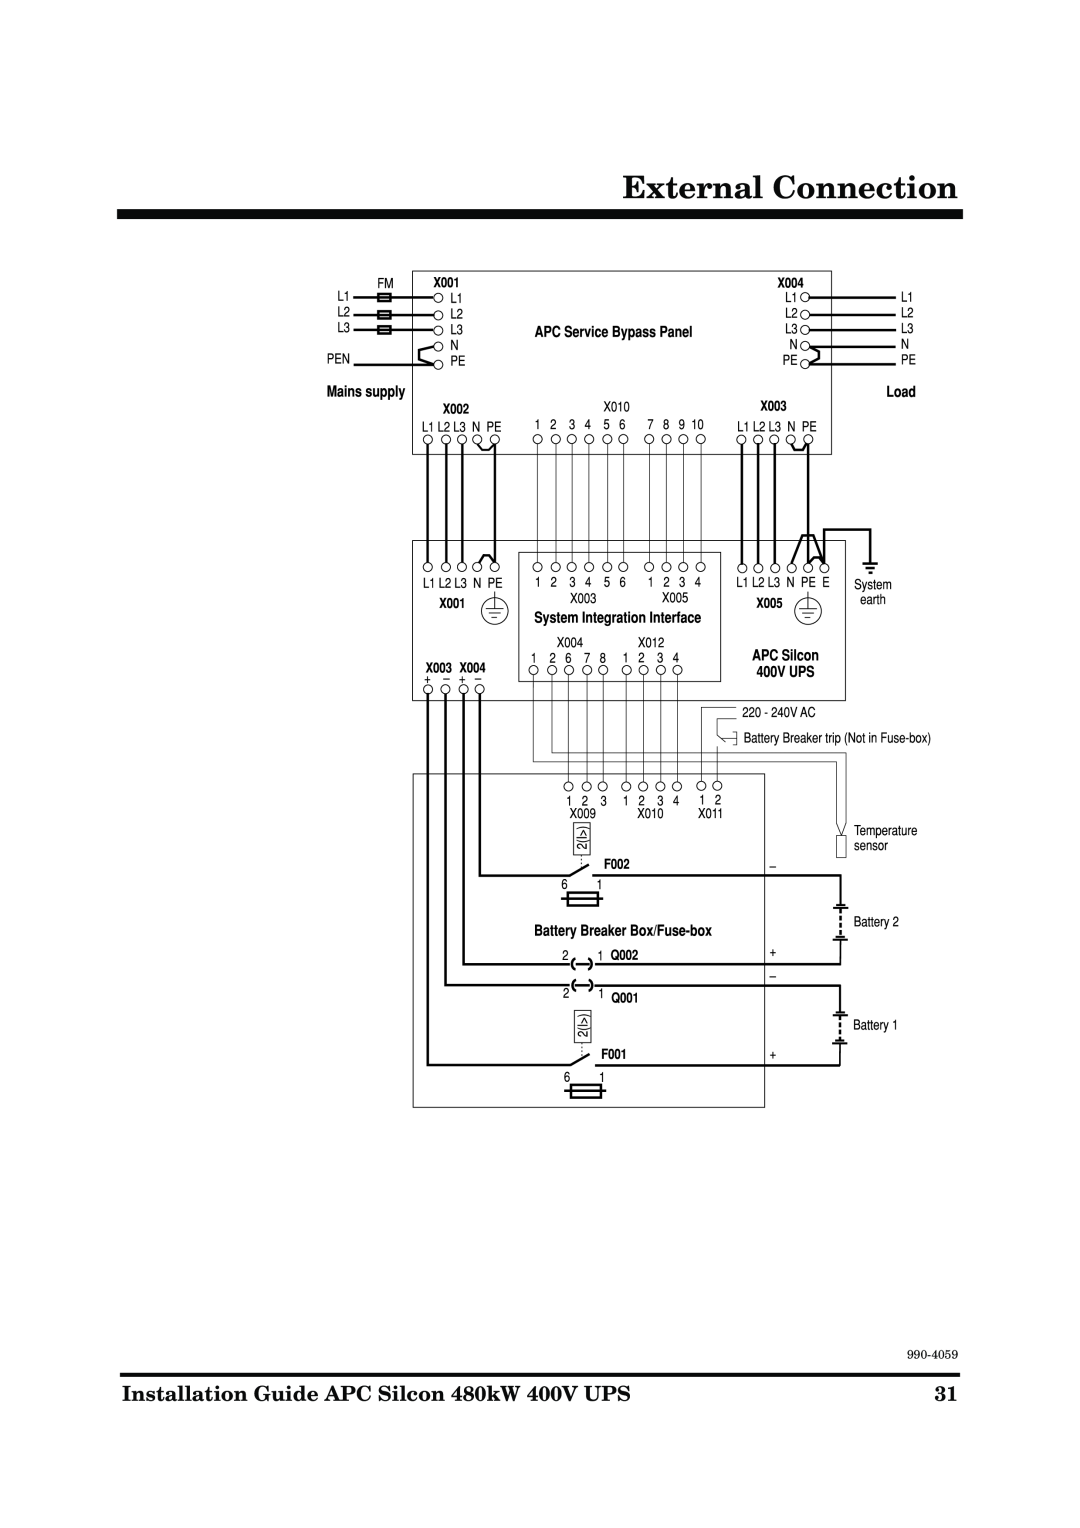 American Power Conversion manual External Connection, Installation Guide APC Silcon 480kW 400V UPS, 990-4059 